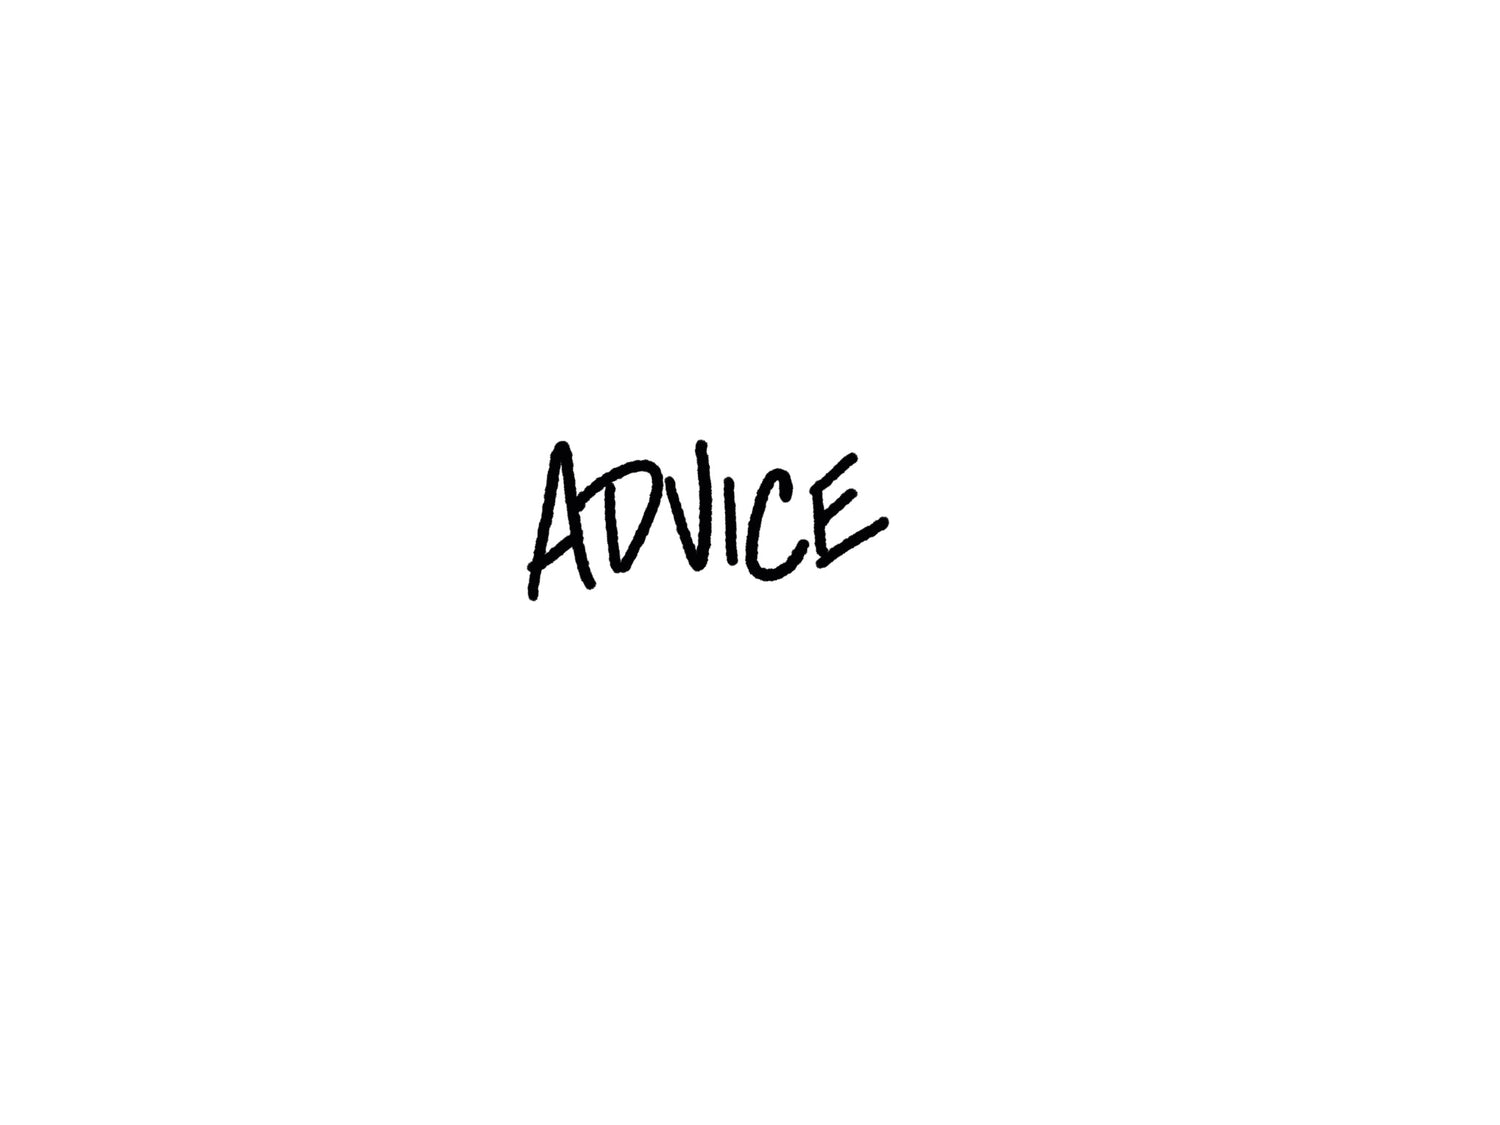 Advice